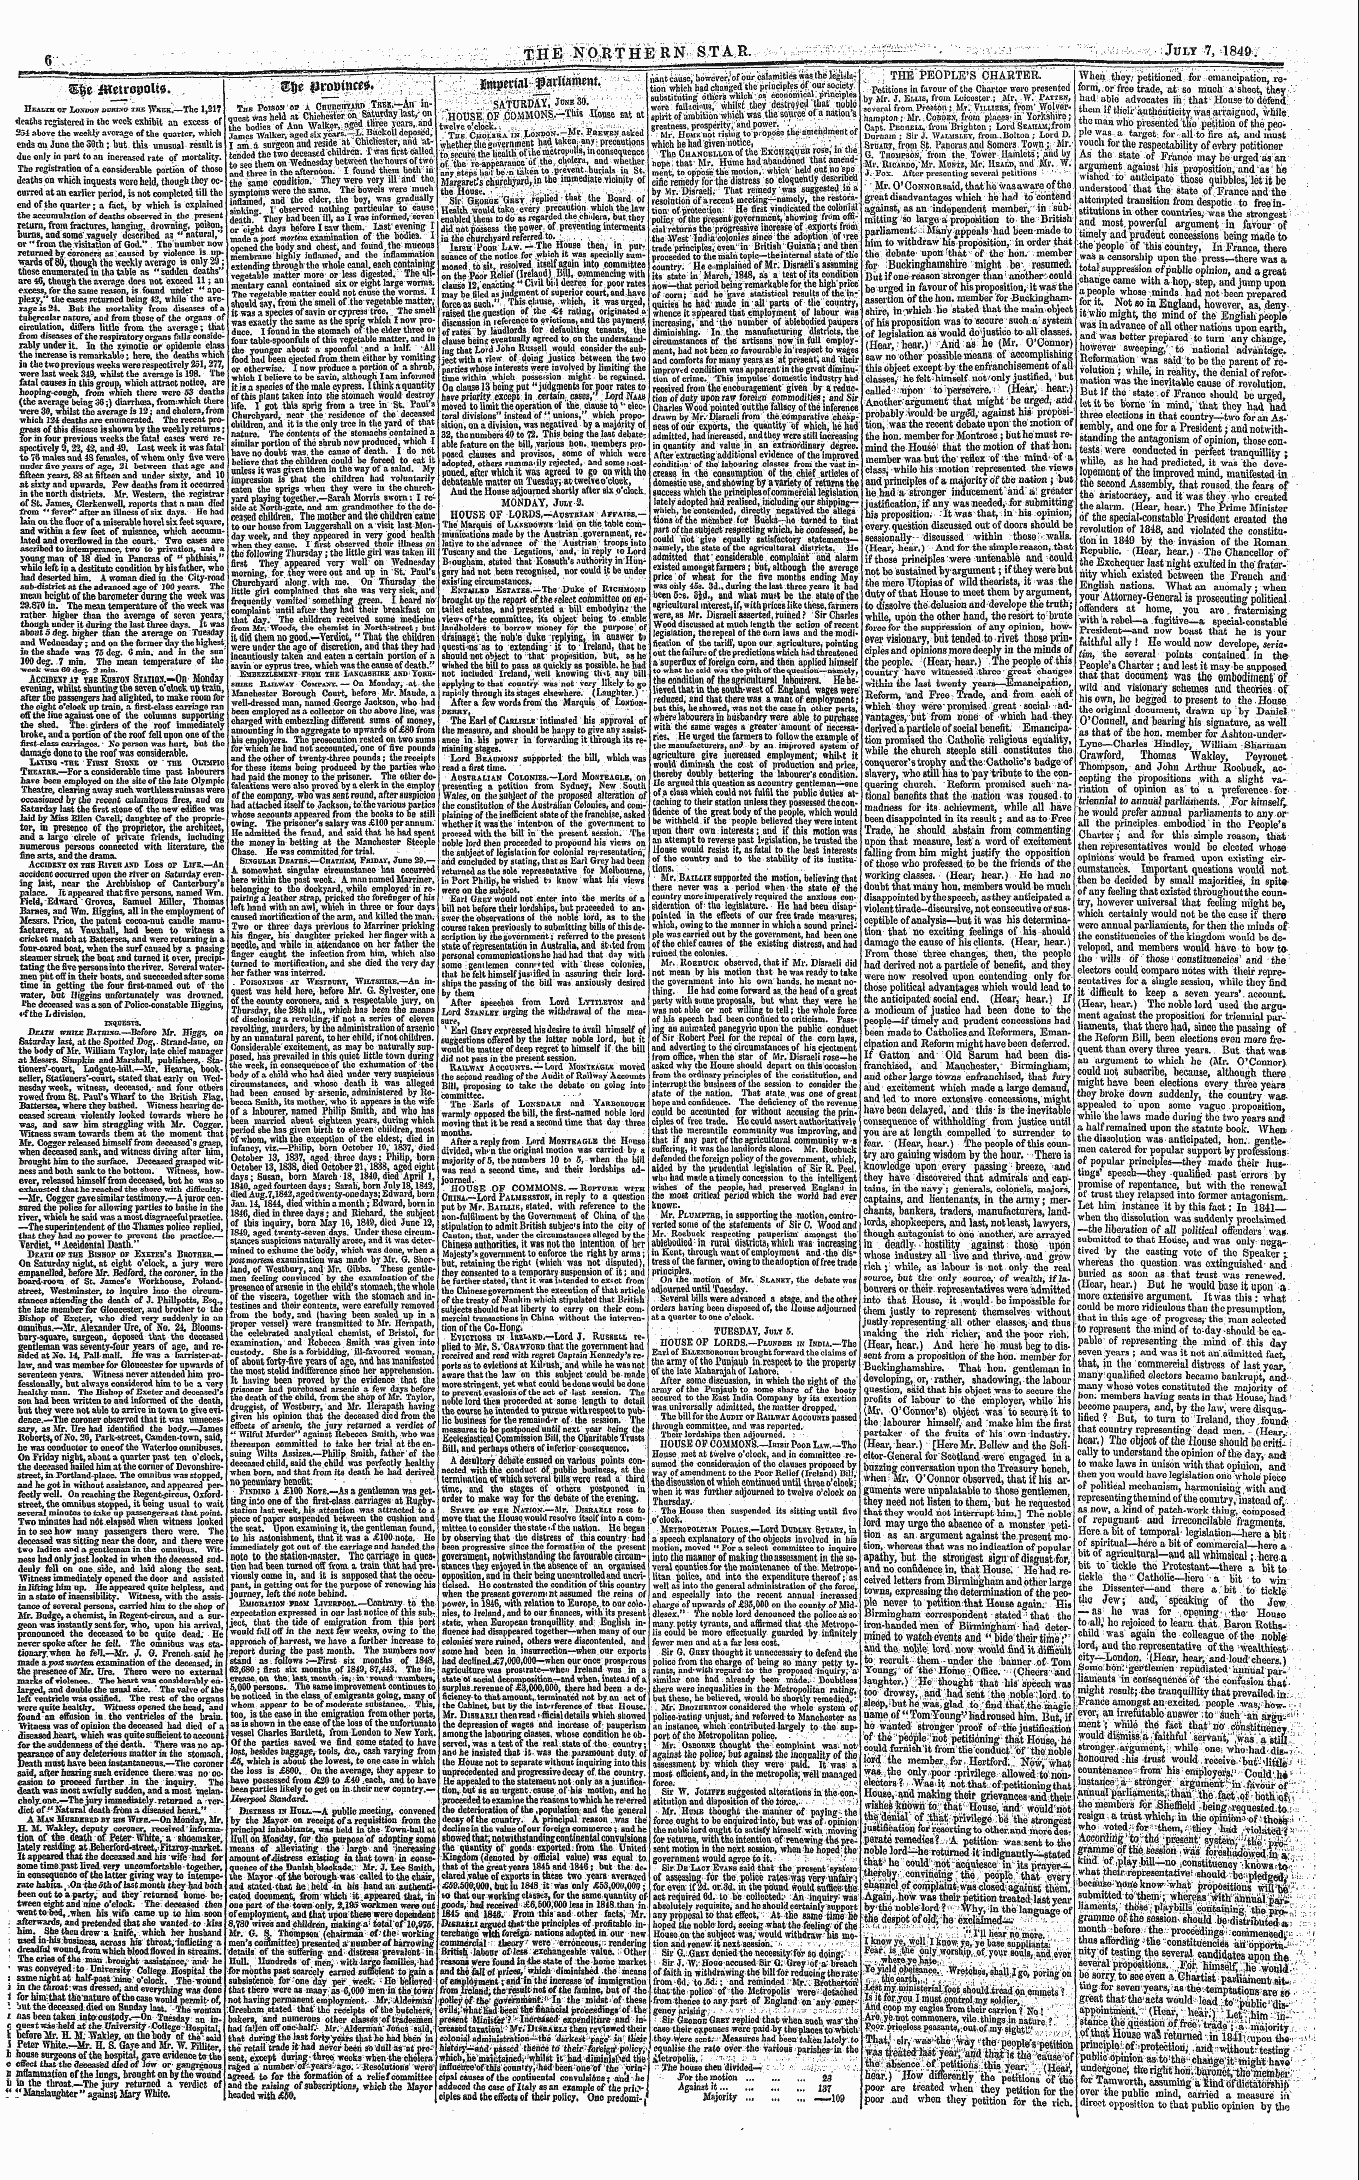 Northern Star (1837-1852): jS F Y, 3rd edition - Stje Ui-Odthcf0